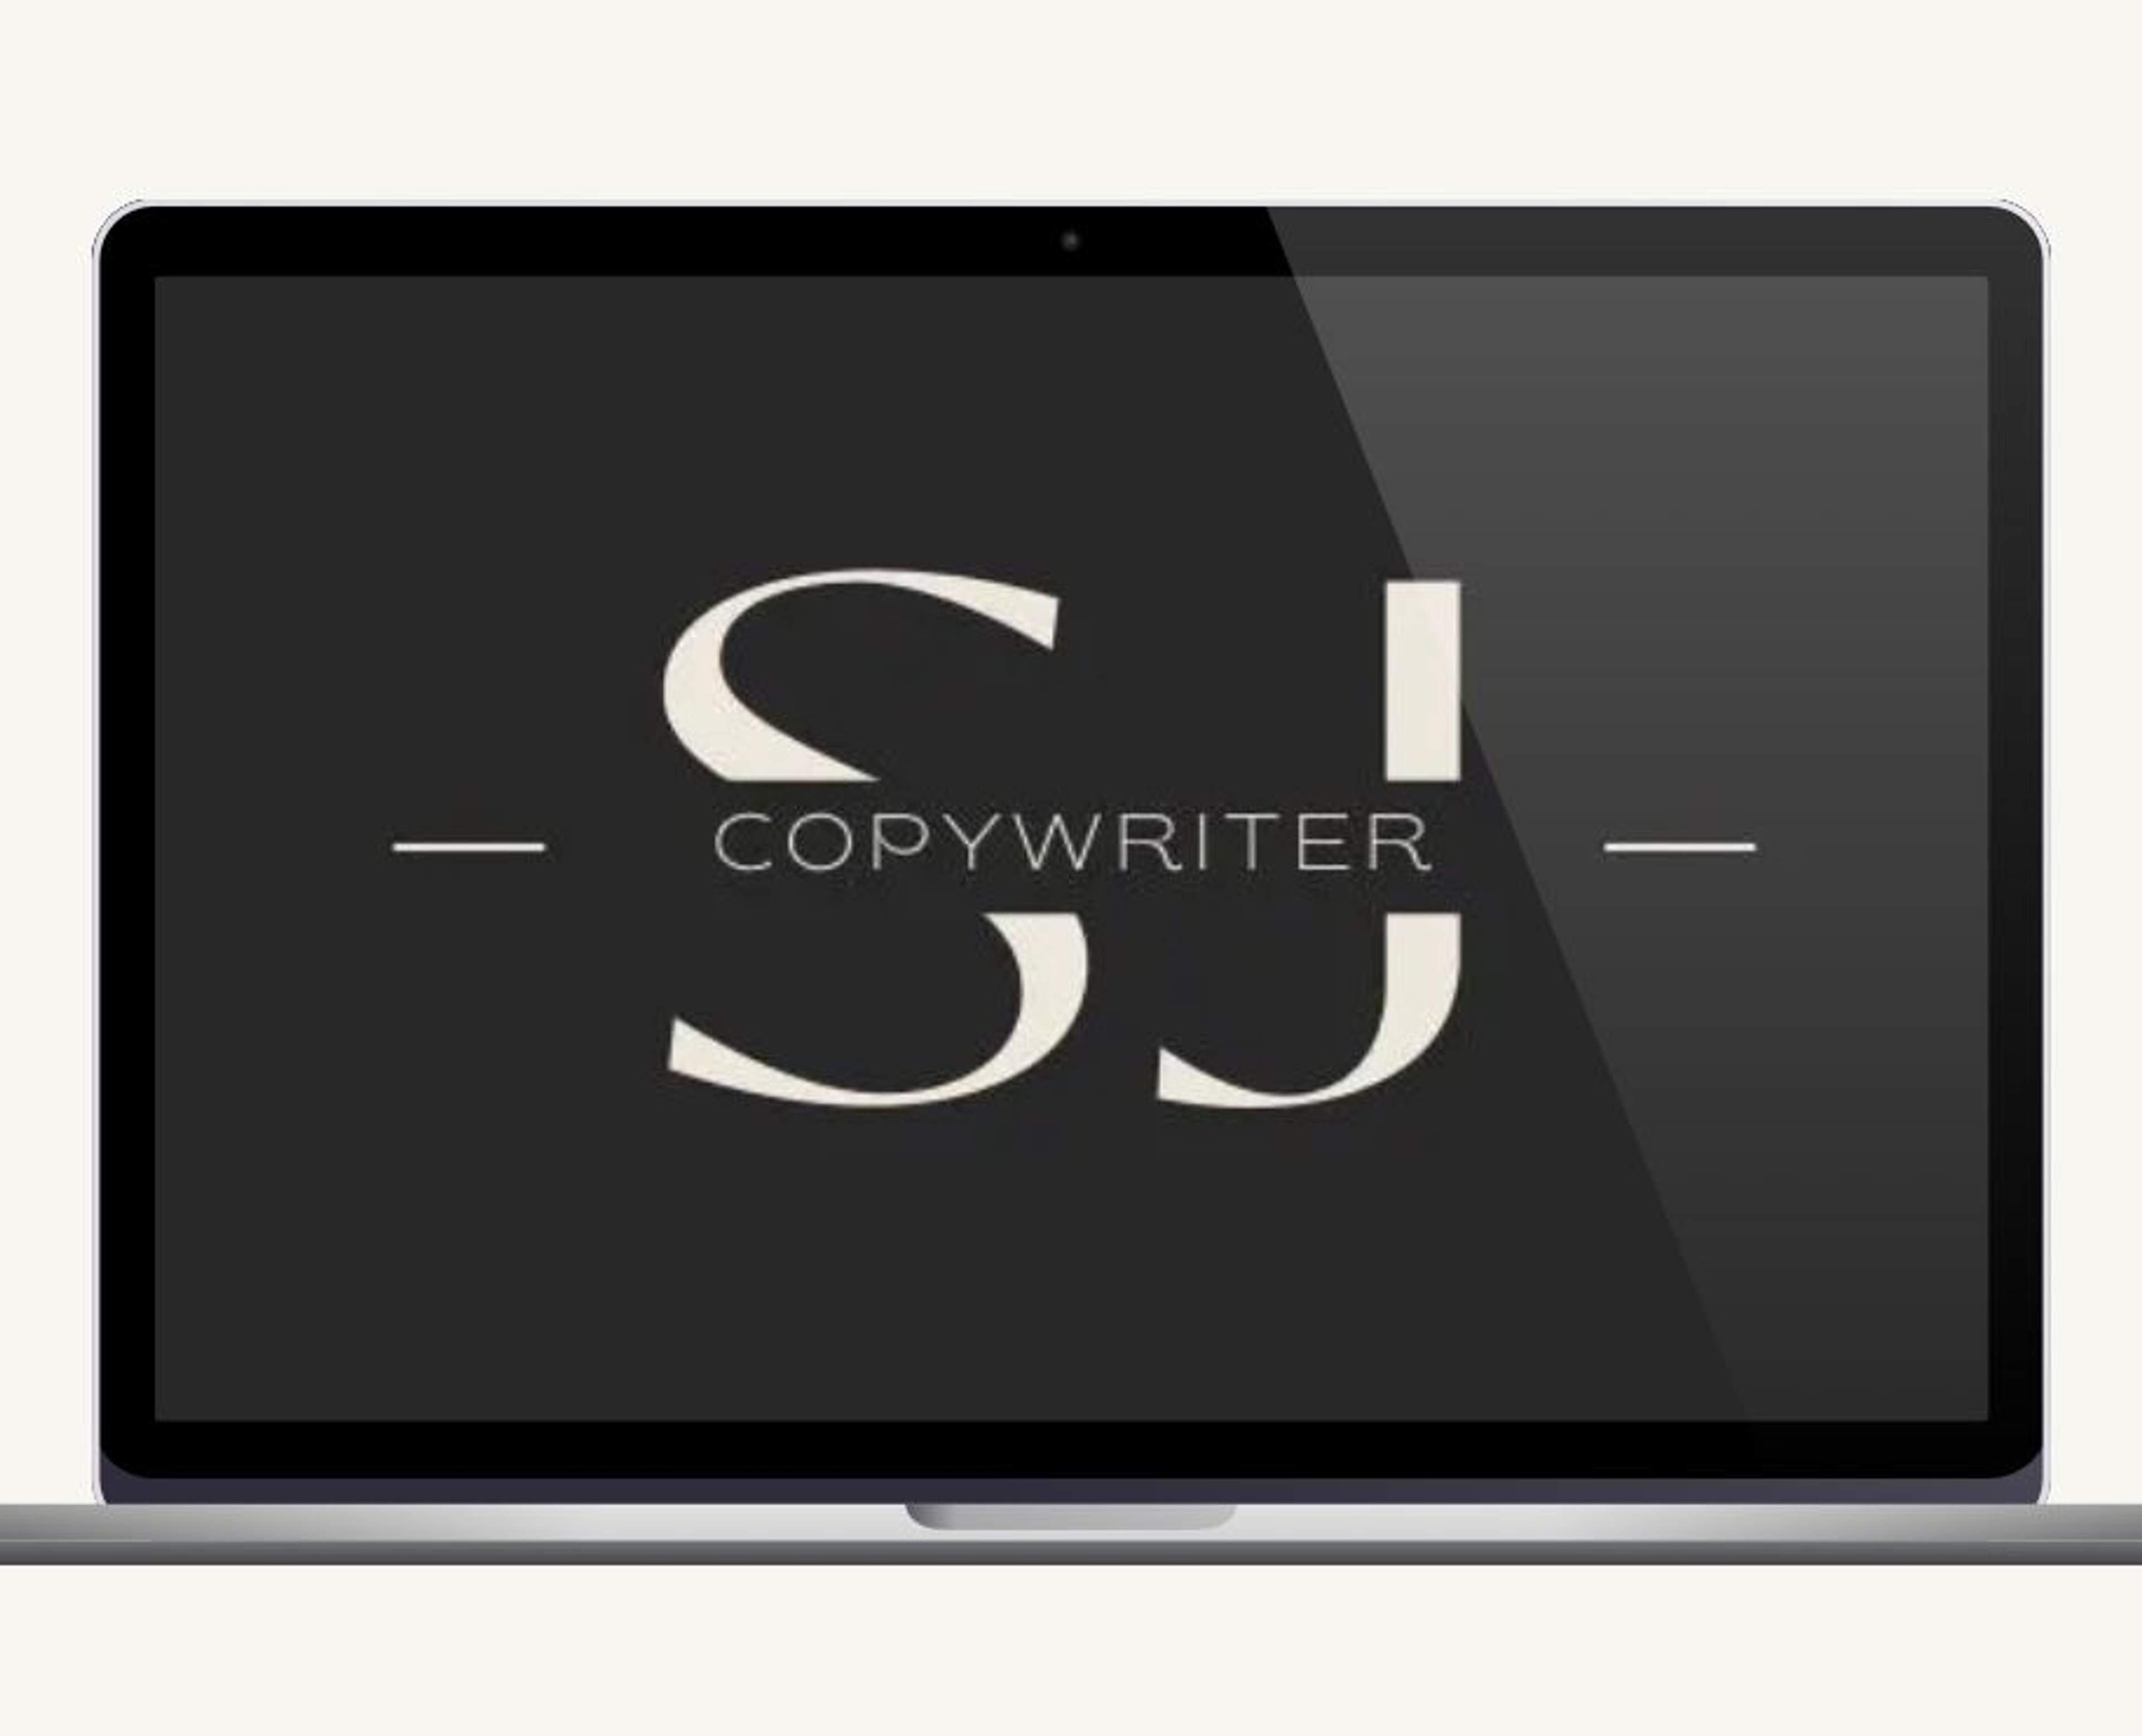 Copywriting, SEO copywriting, social media marketing services by savanna joy 

